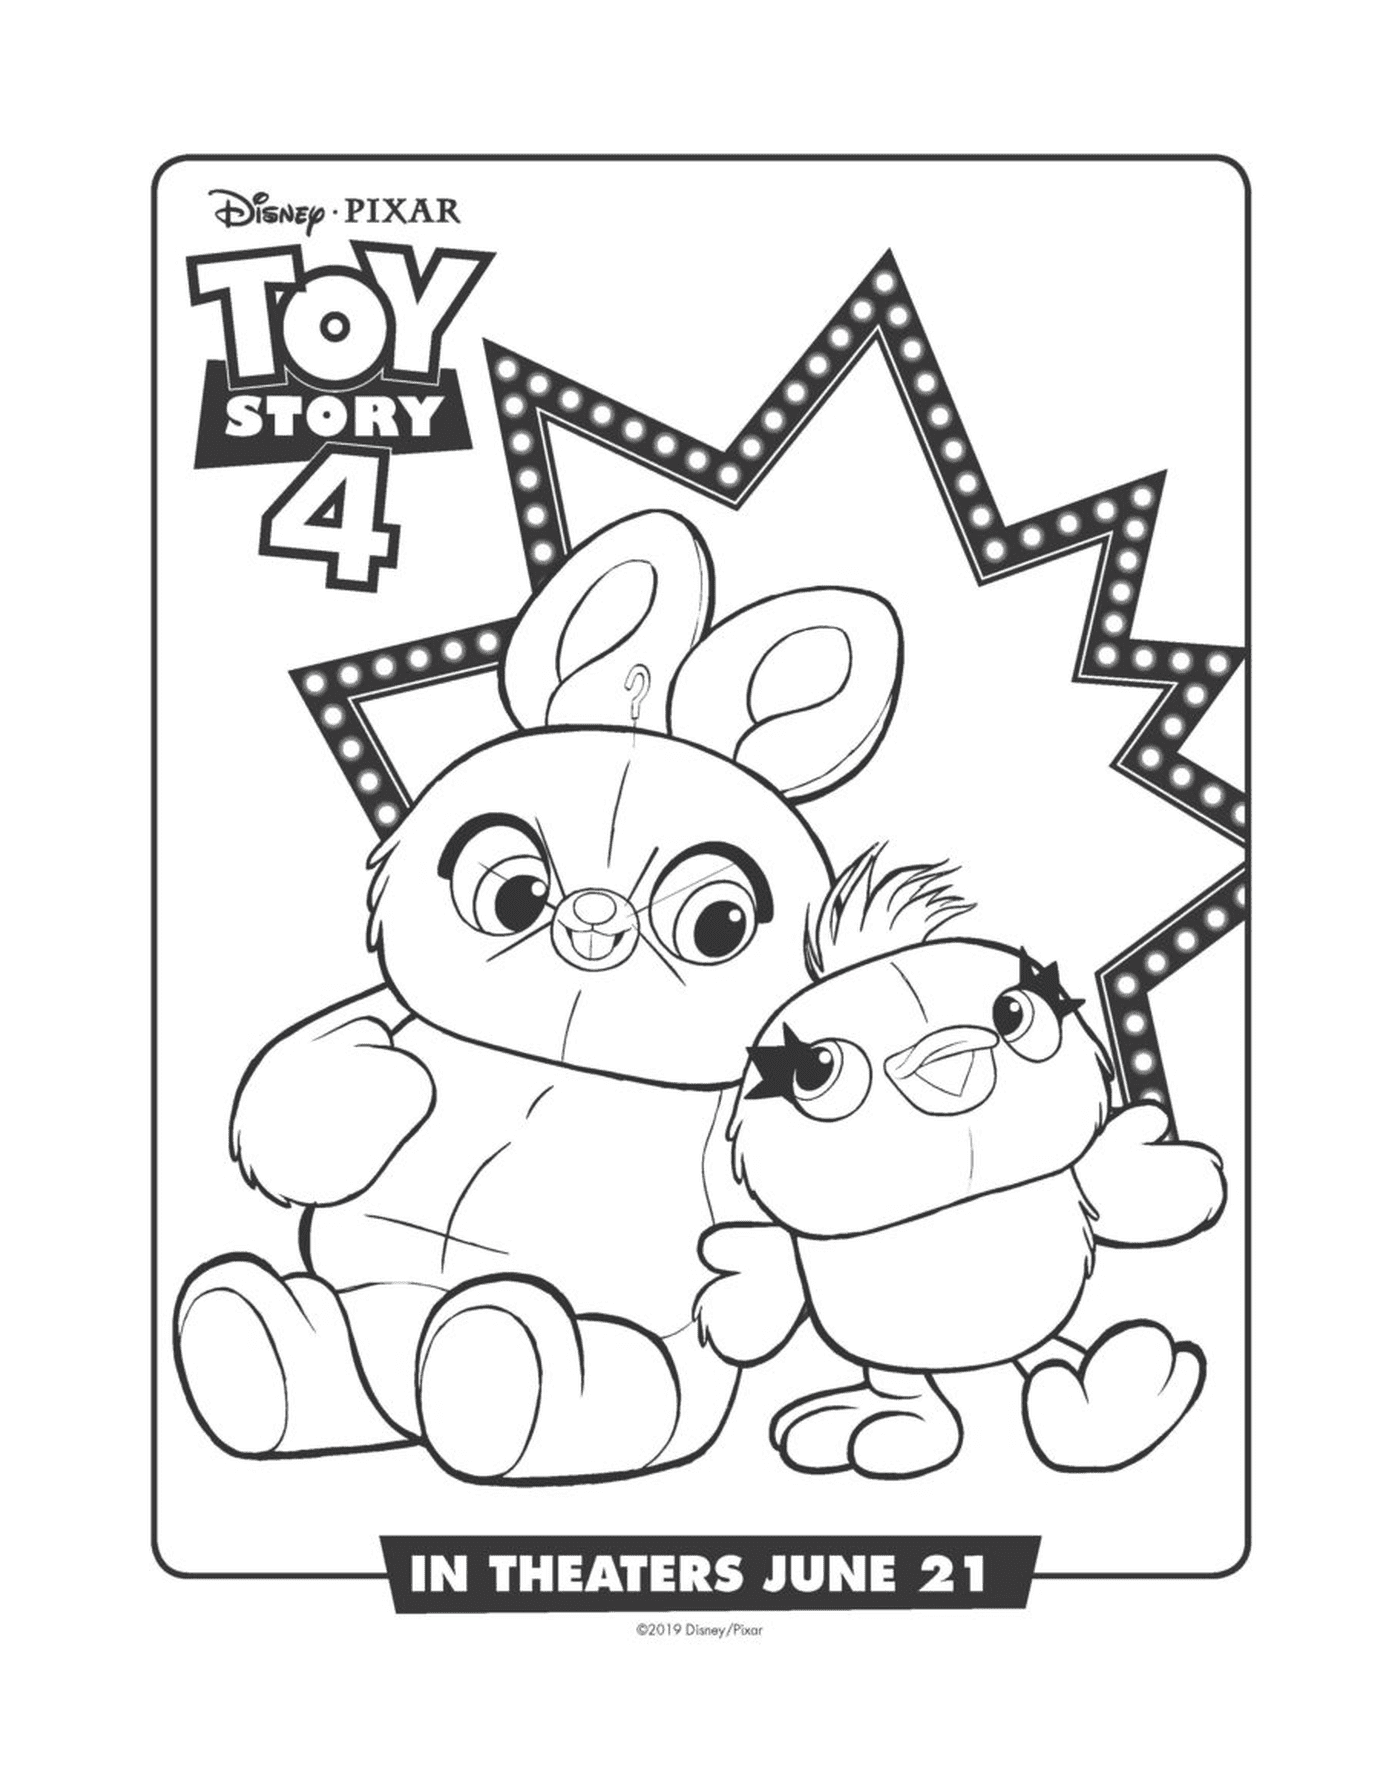   Bunny et Ducky de Toy Story 4, complices 